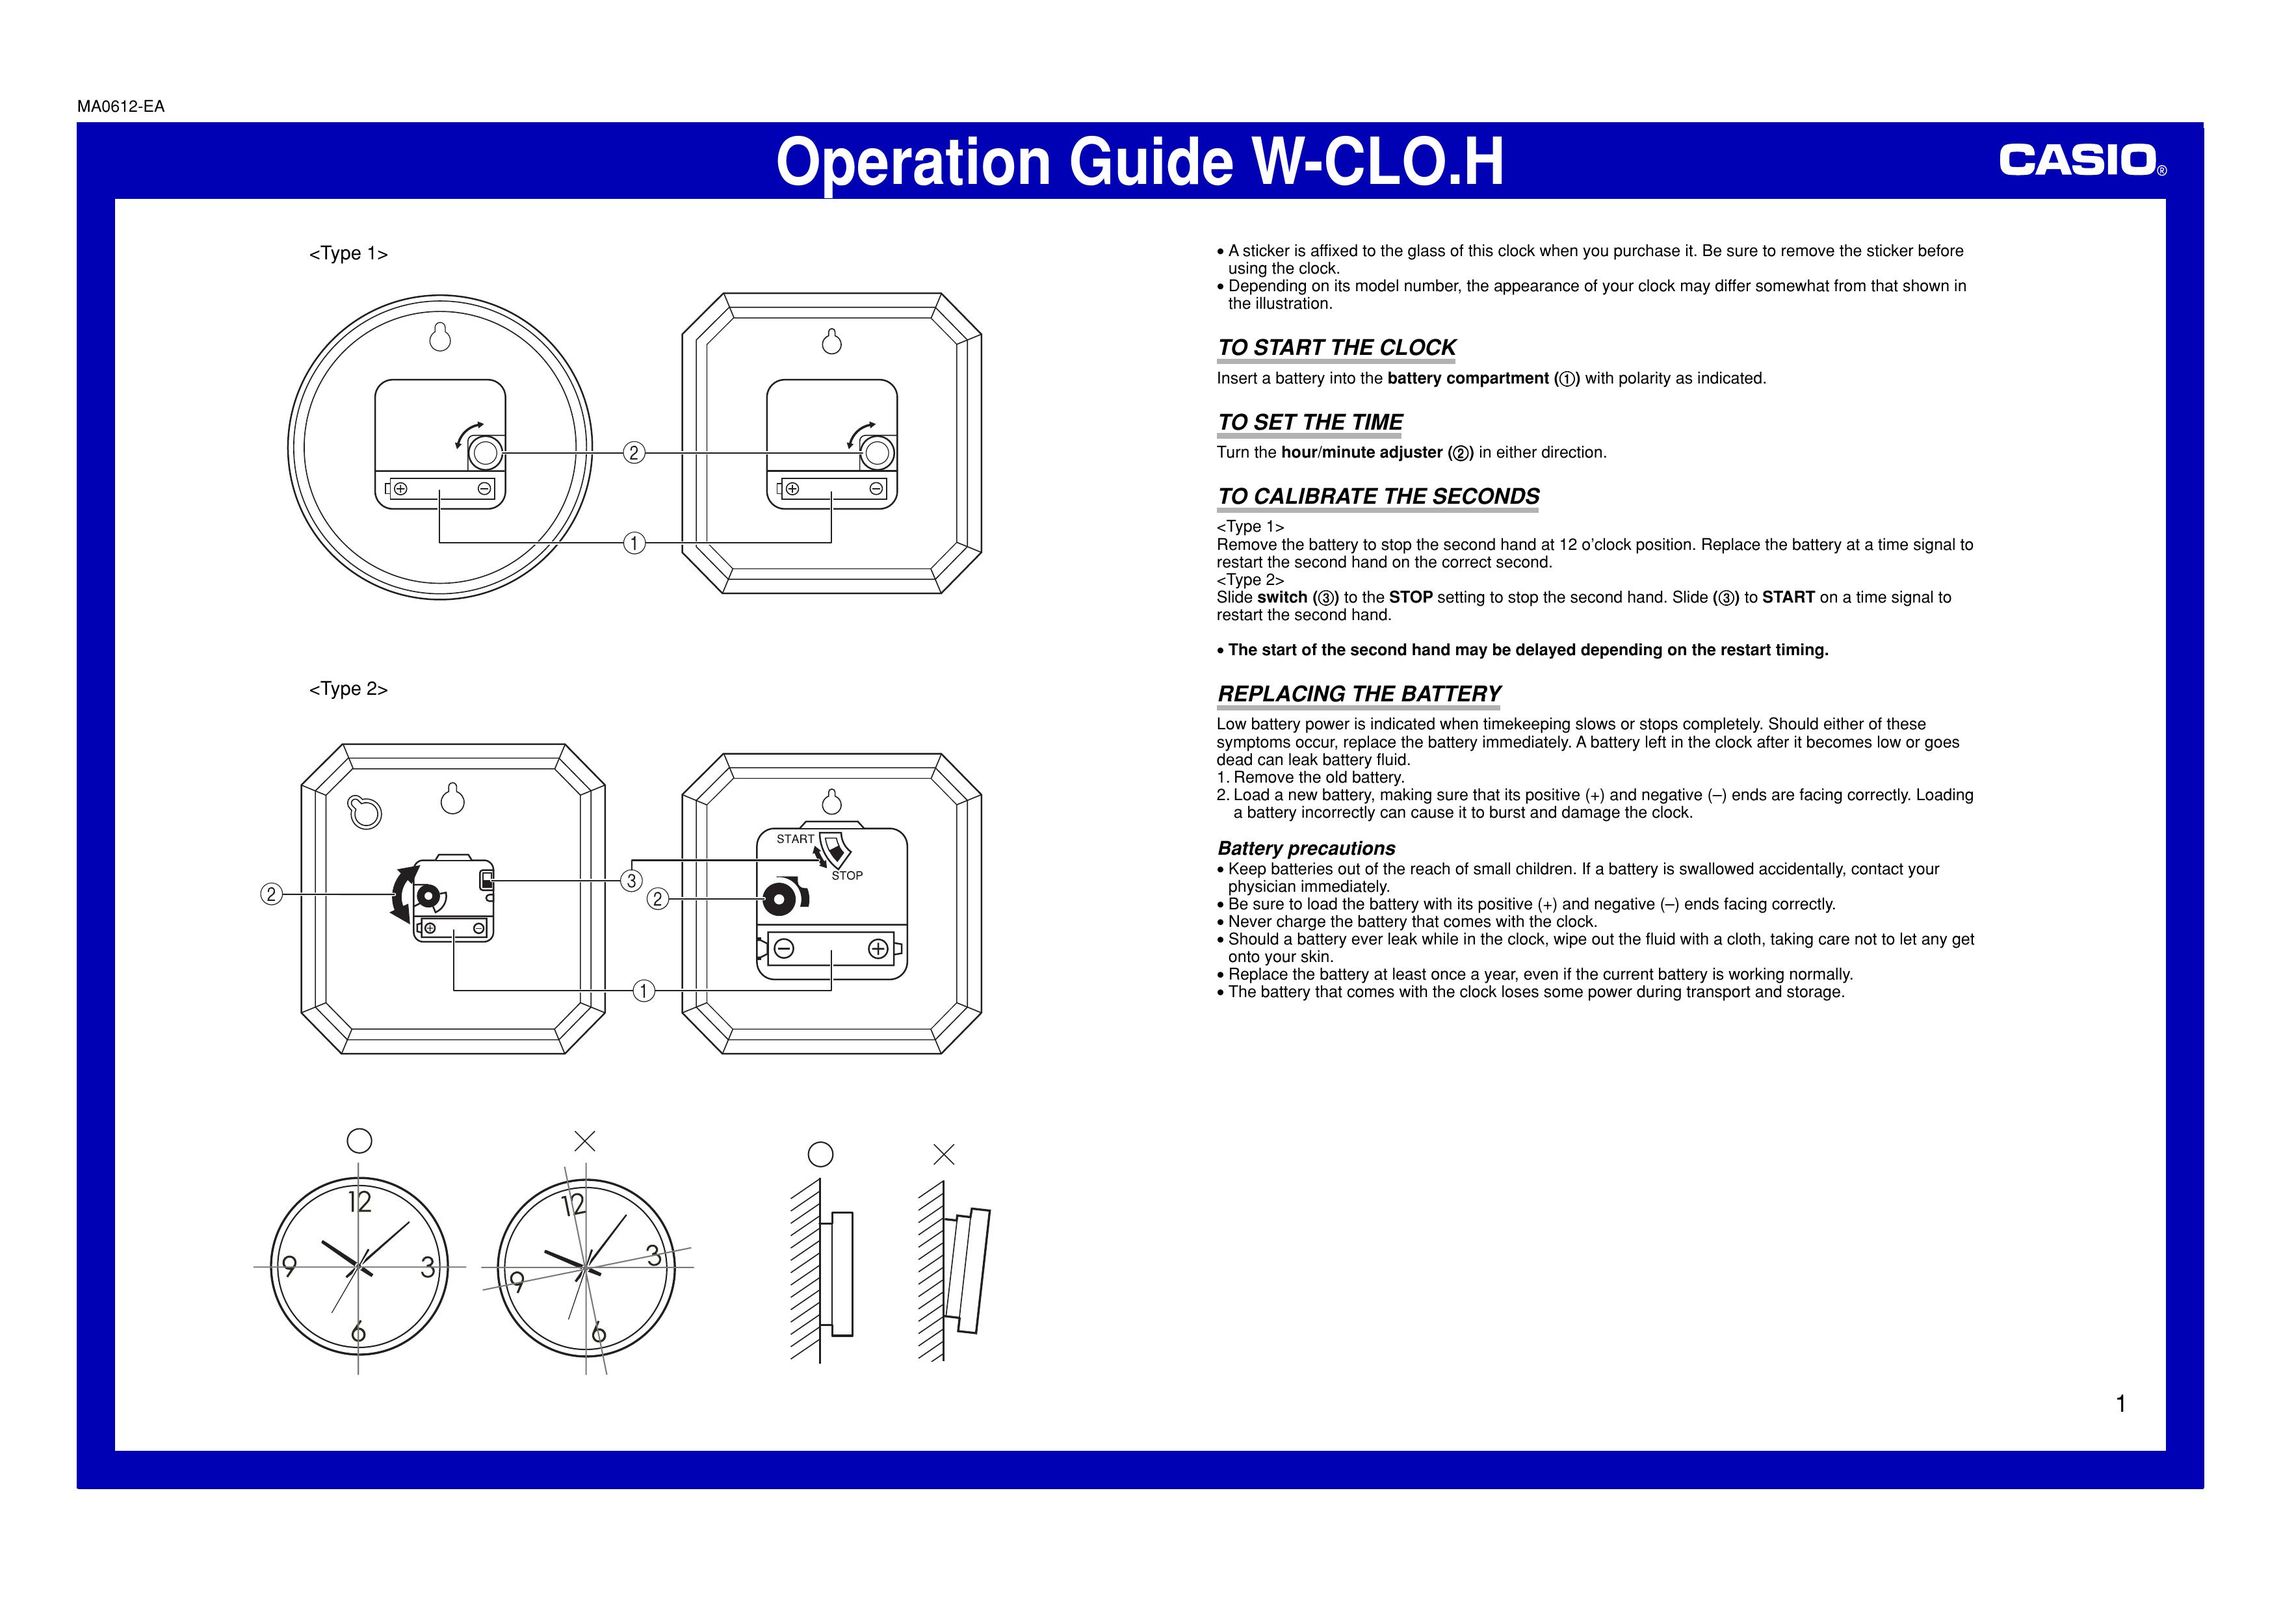 Casio MA0612-EA Home Theater System User Manual